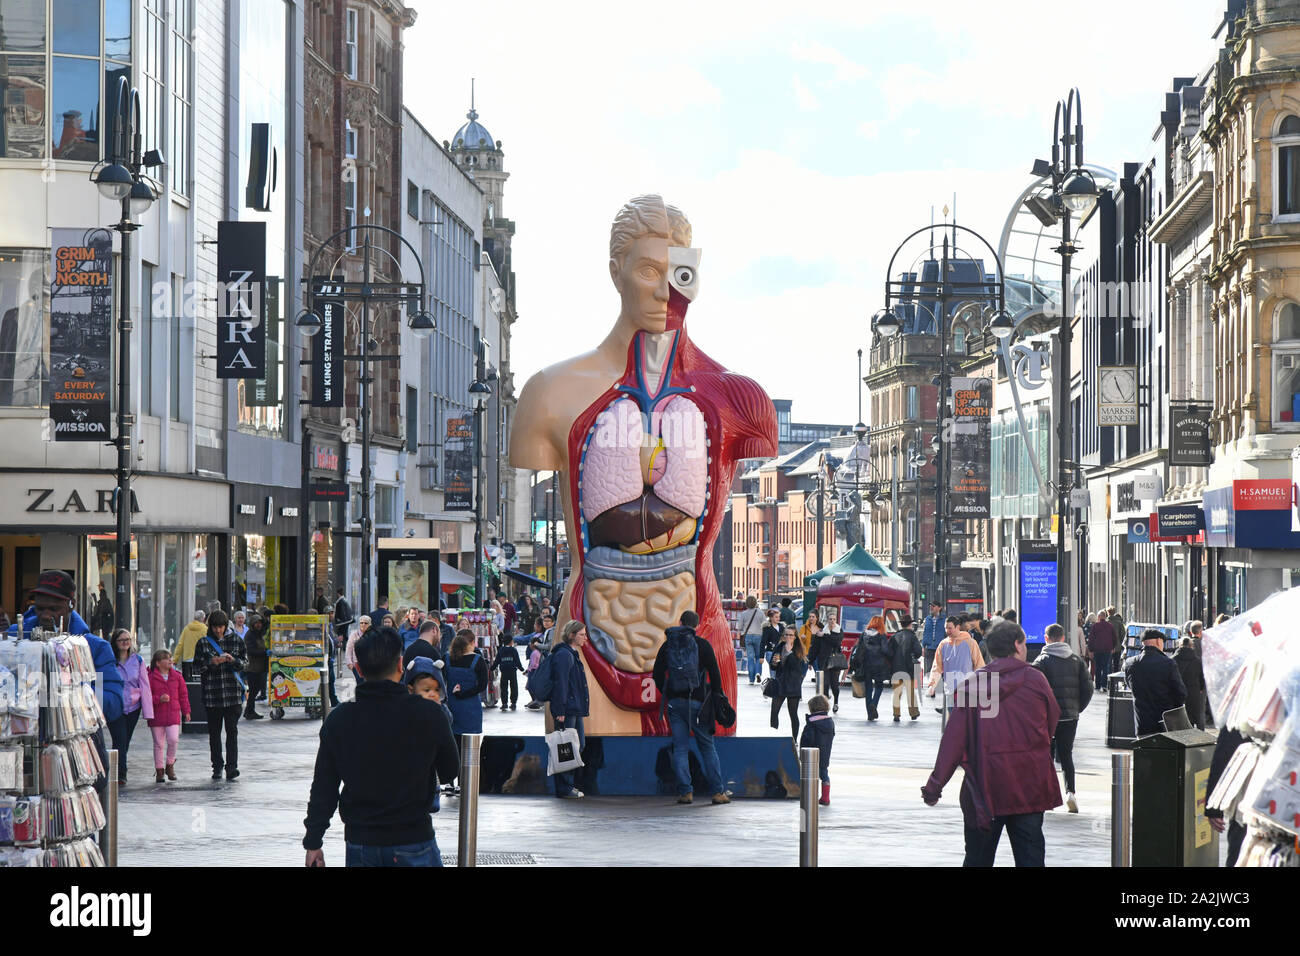 Damián hirst briggate sculture himno en Leeds, Reino Unido Foto de stock